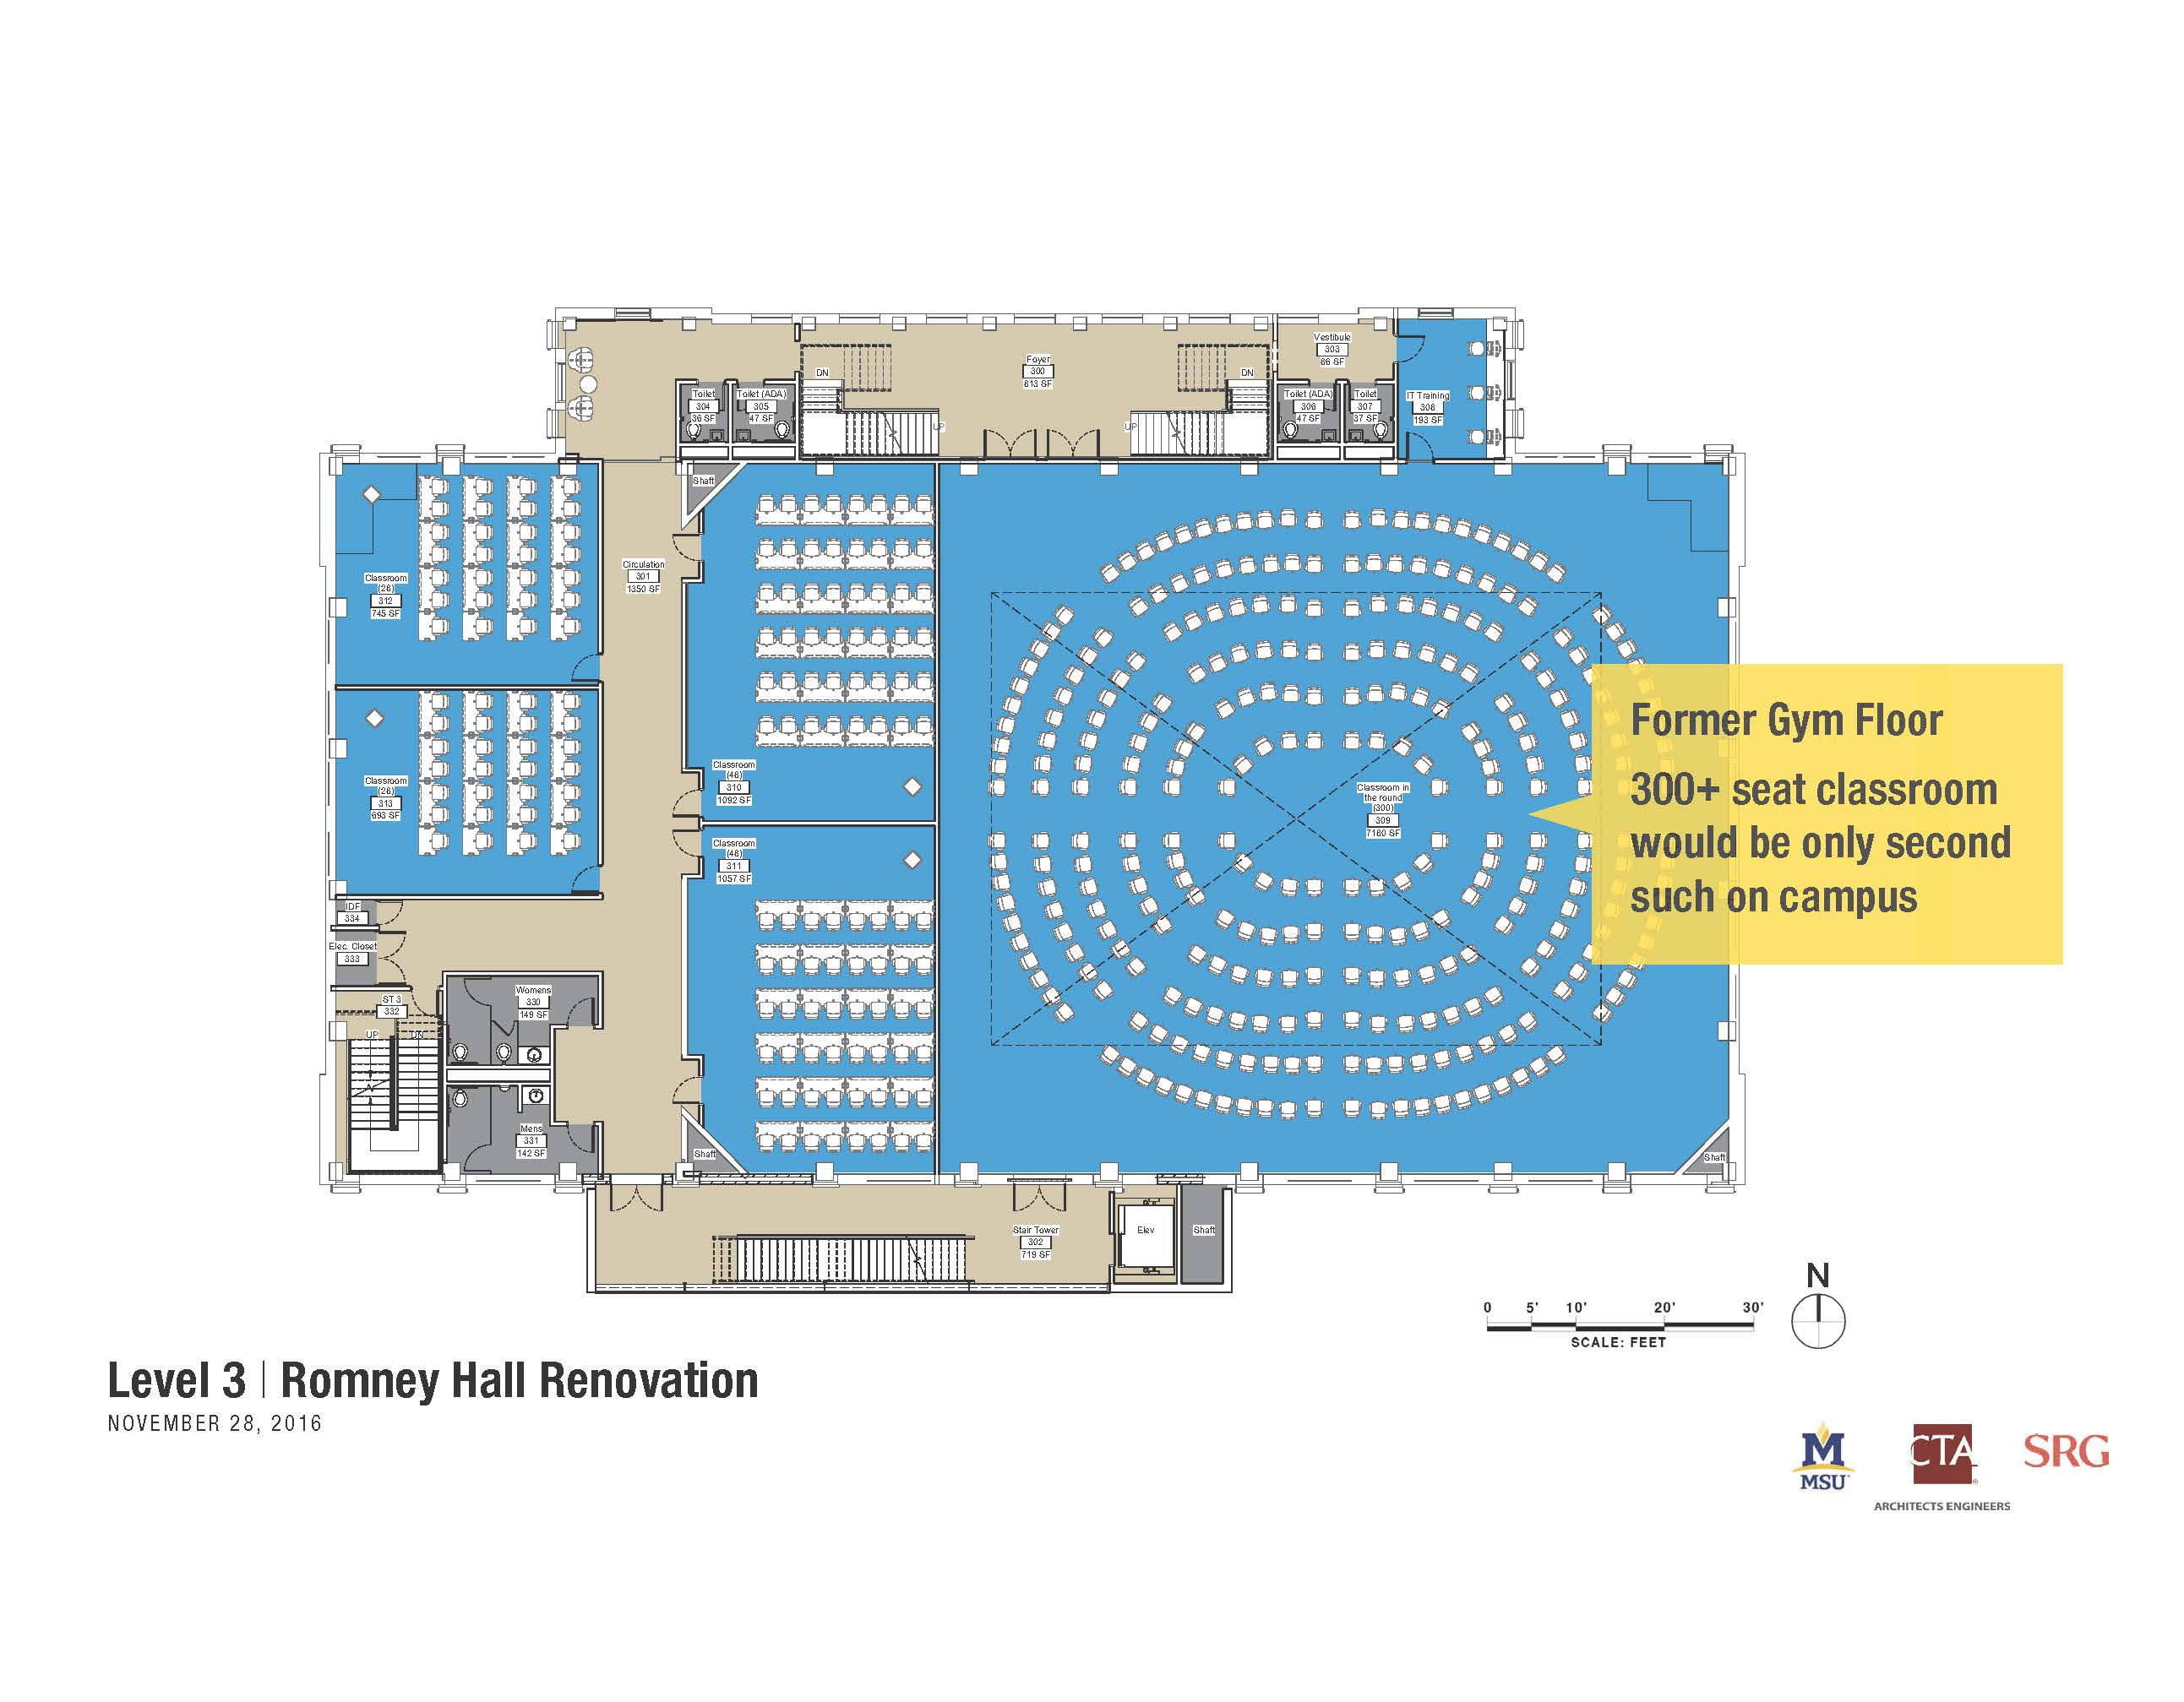 Romney Hall repurposing floorplan showing Level 3 of the building.